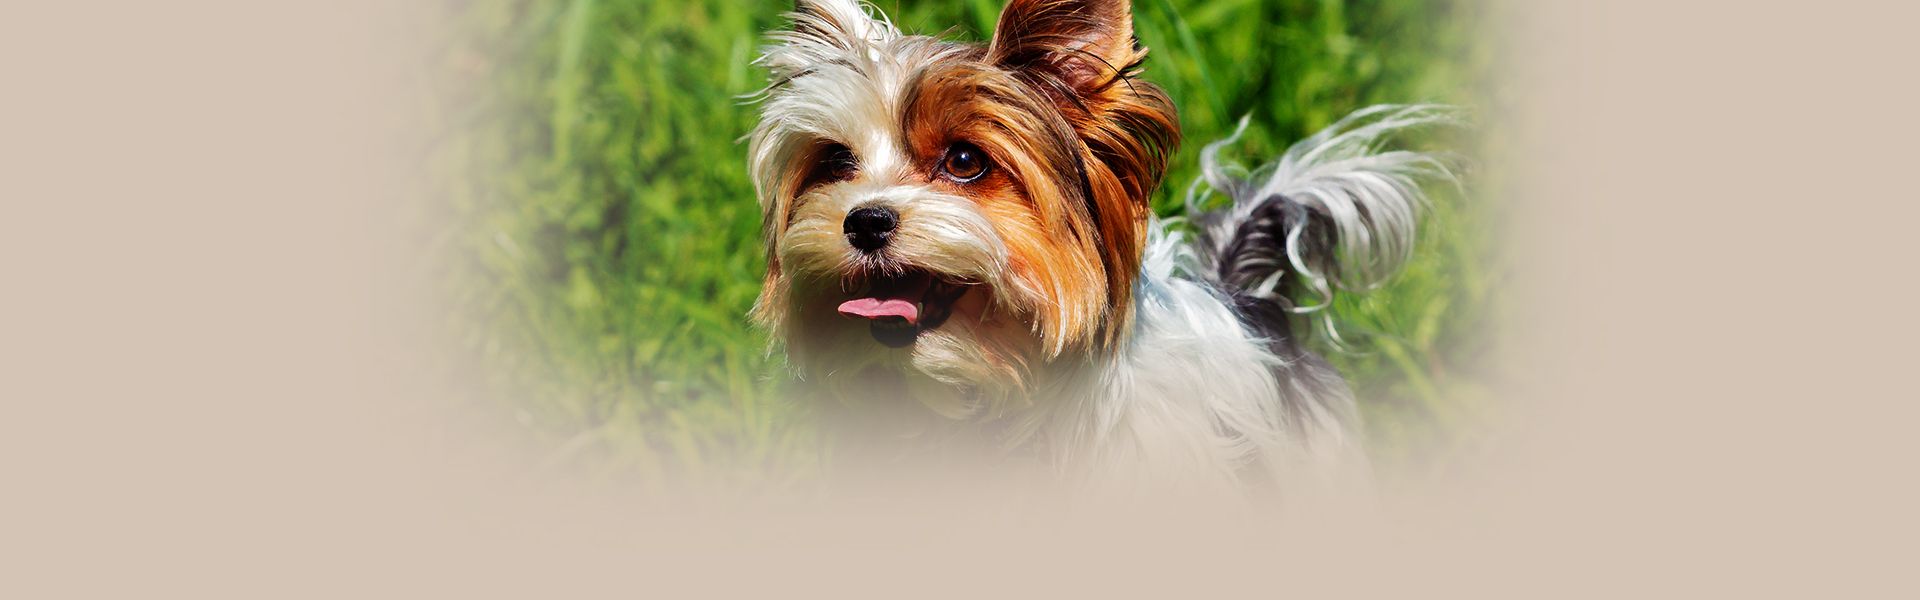 adorable yorkshire terrier dog